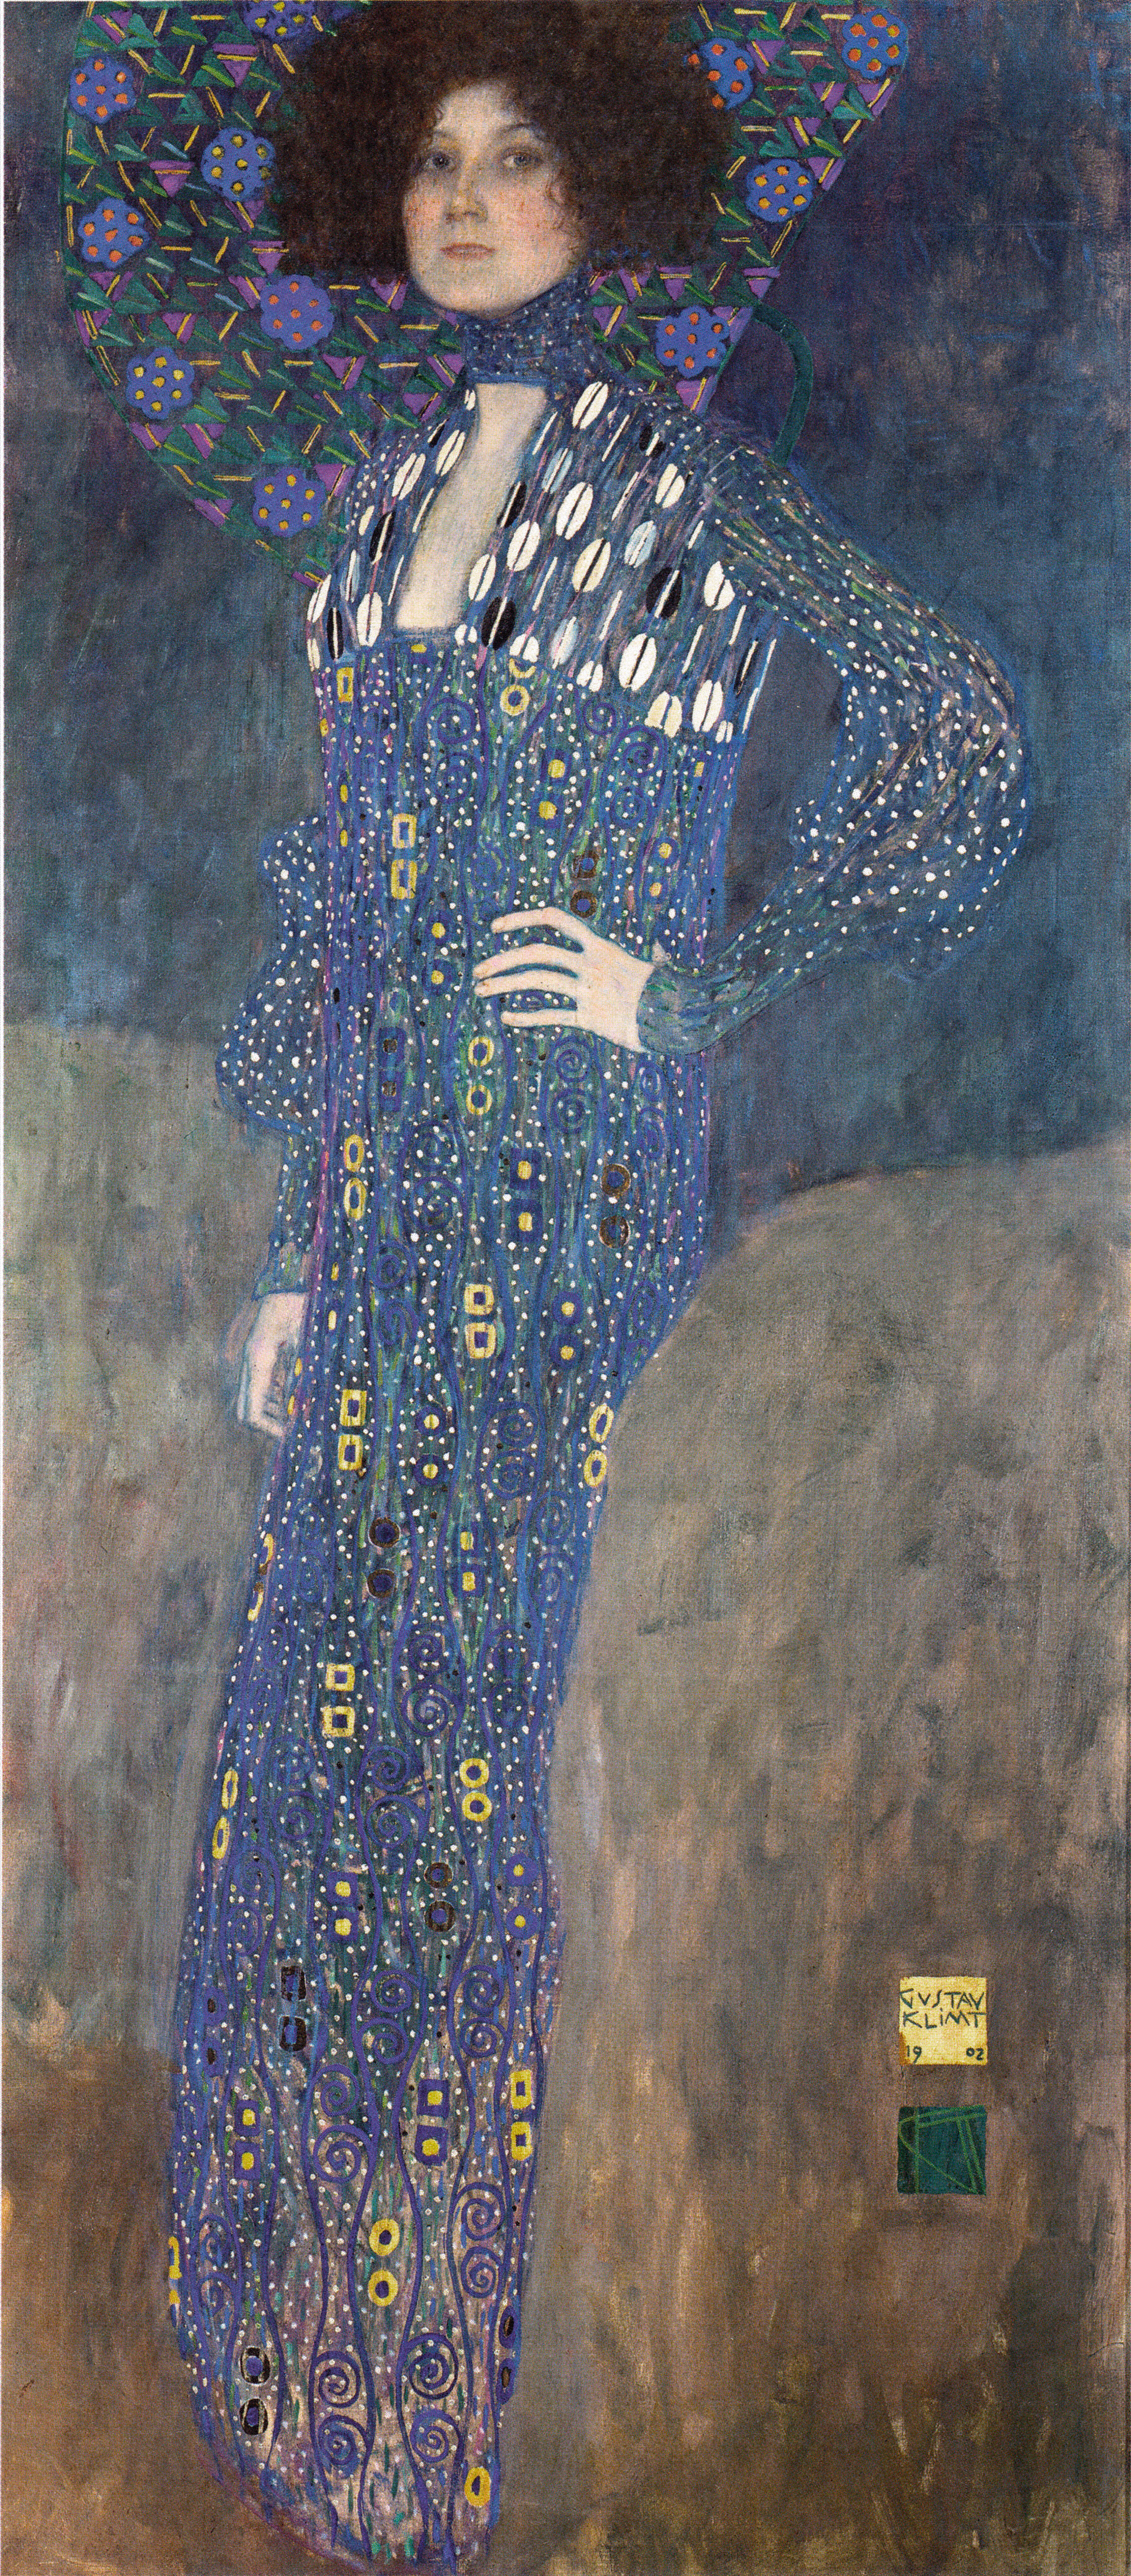 Emilie Louise Flögeová by Gustav Klimt - 1902 - 178 cm × 80 cm 